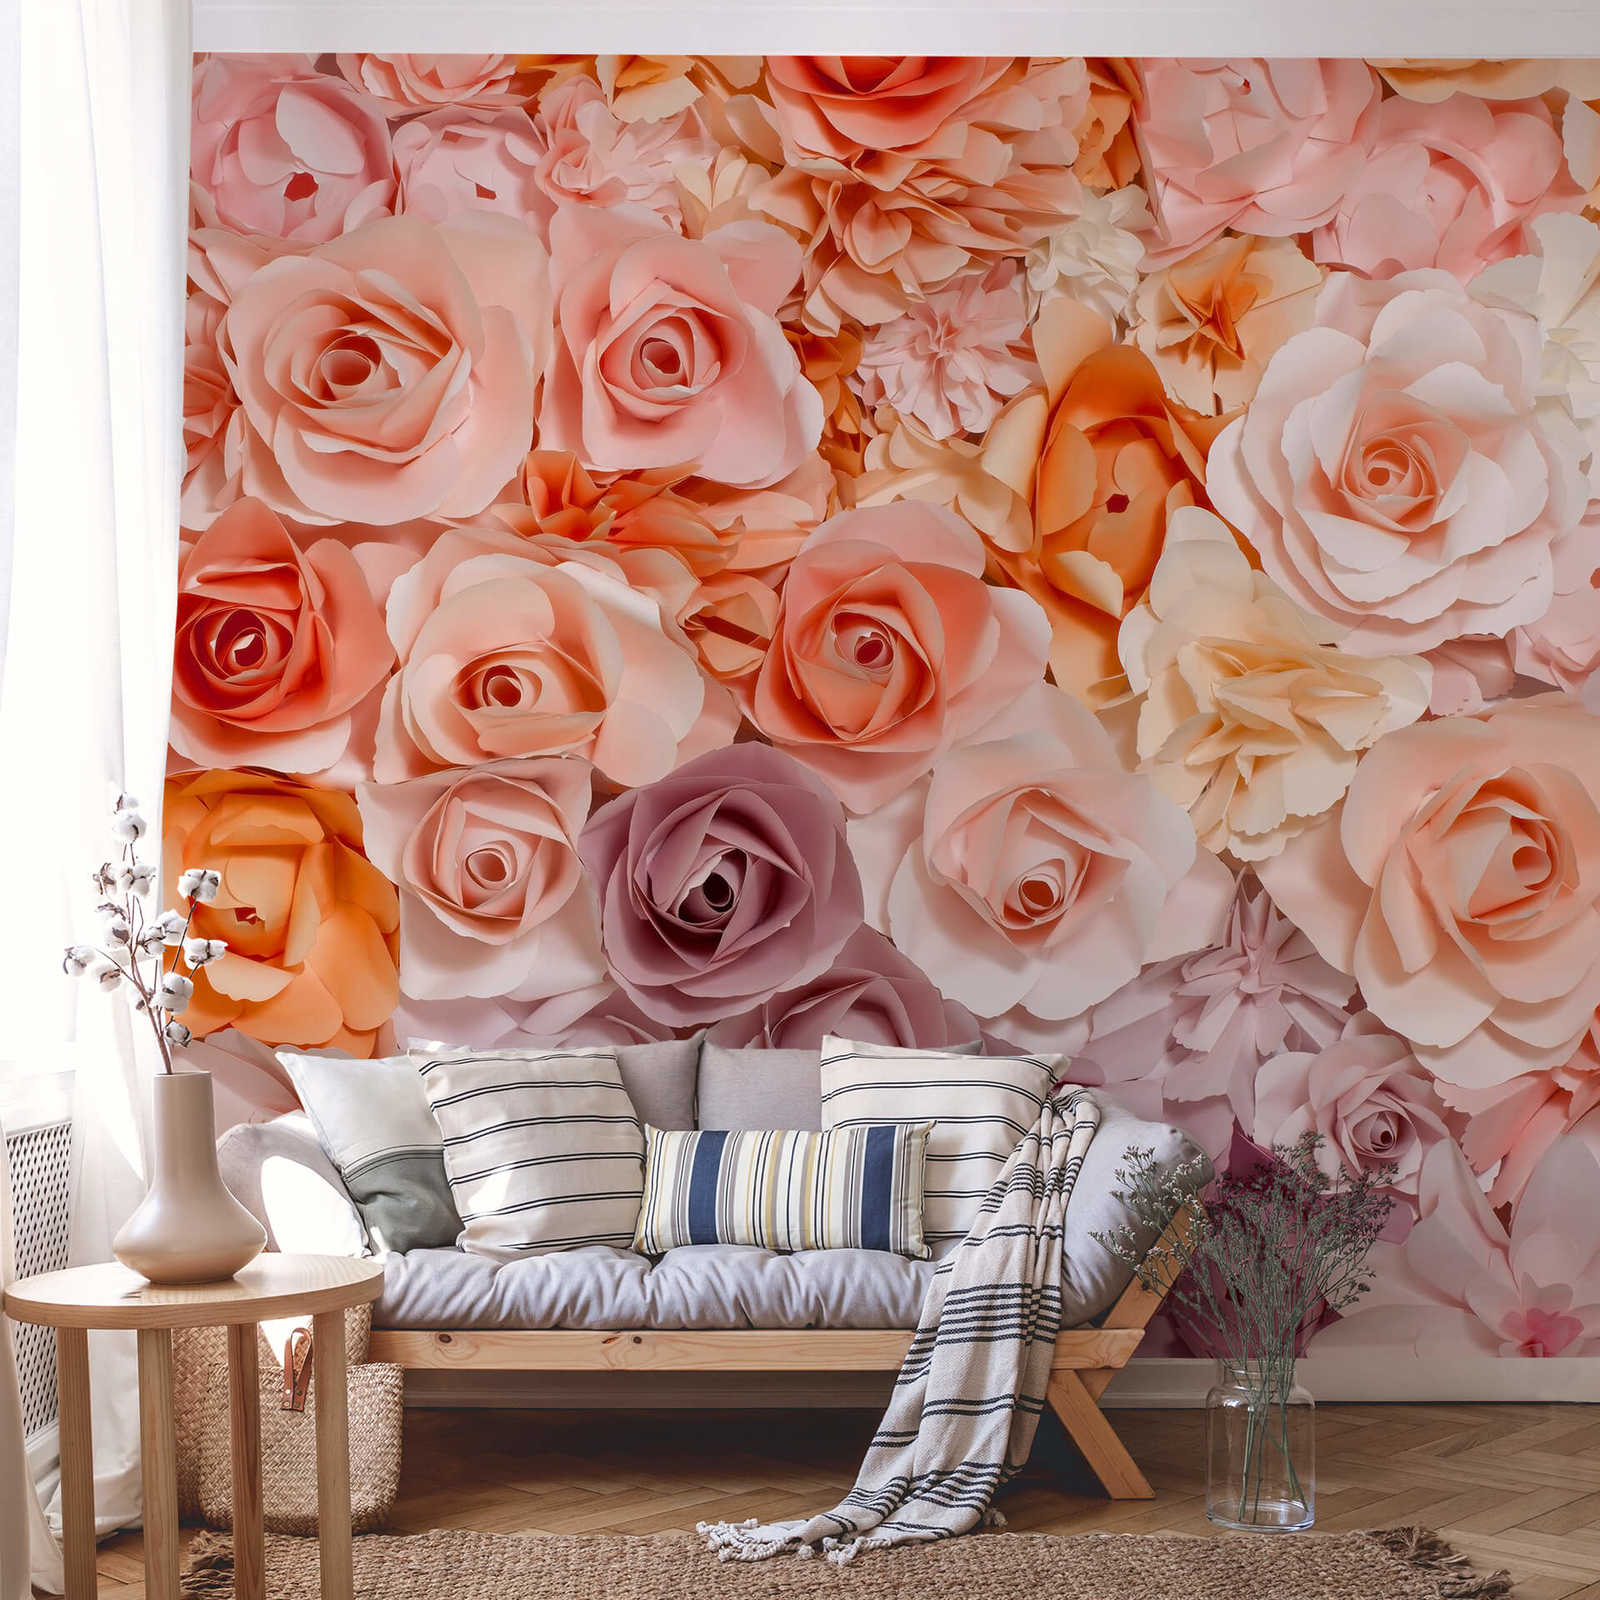             Rosen Fototapete 3D Blütenmuster – Rosa, Weiß, Orange
        